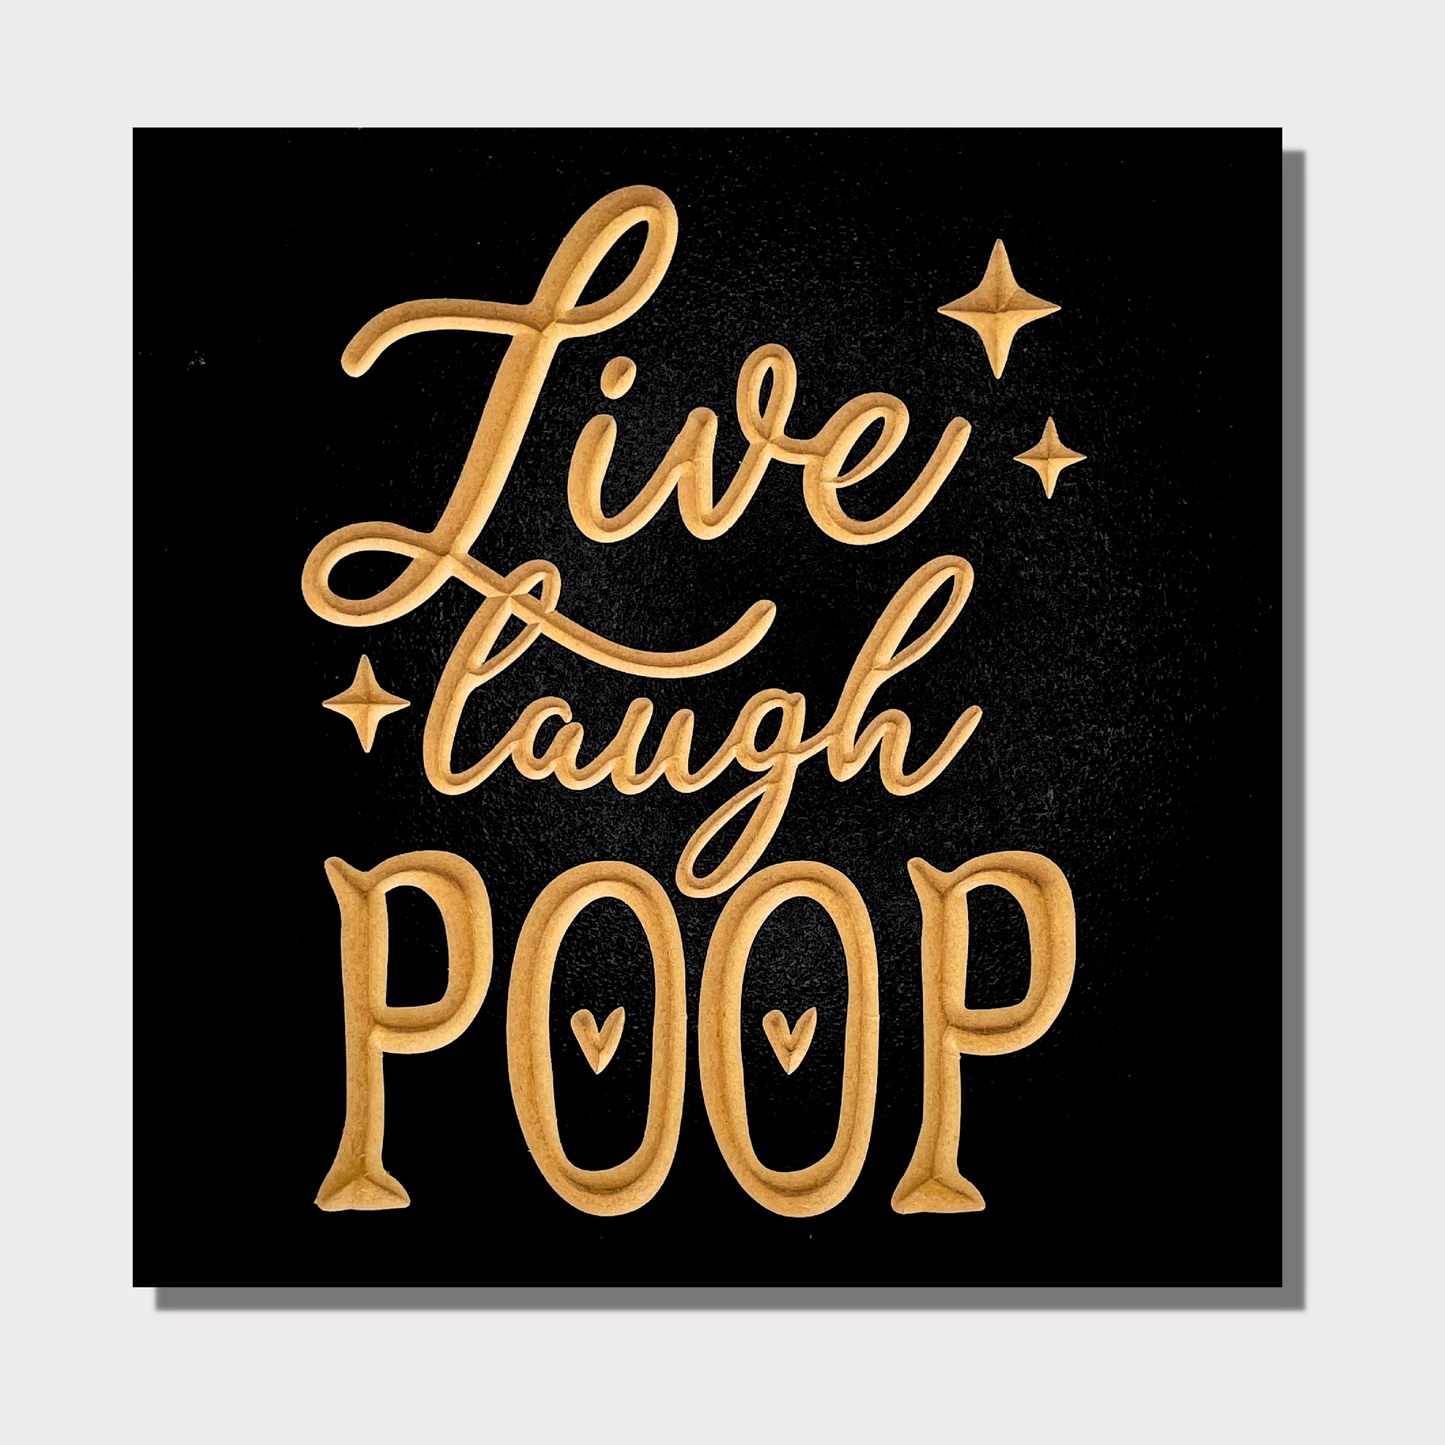 Live Laugh Poop Funny Bathroom Decor